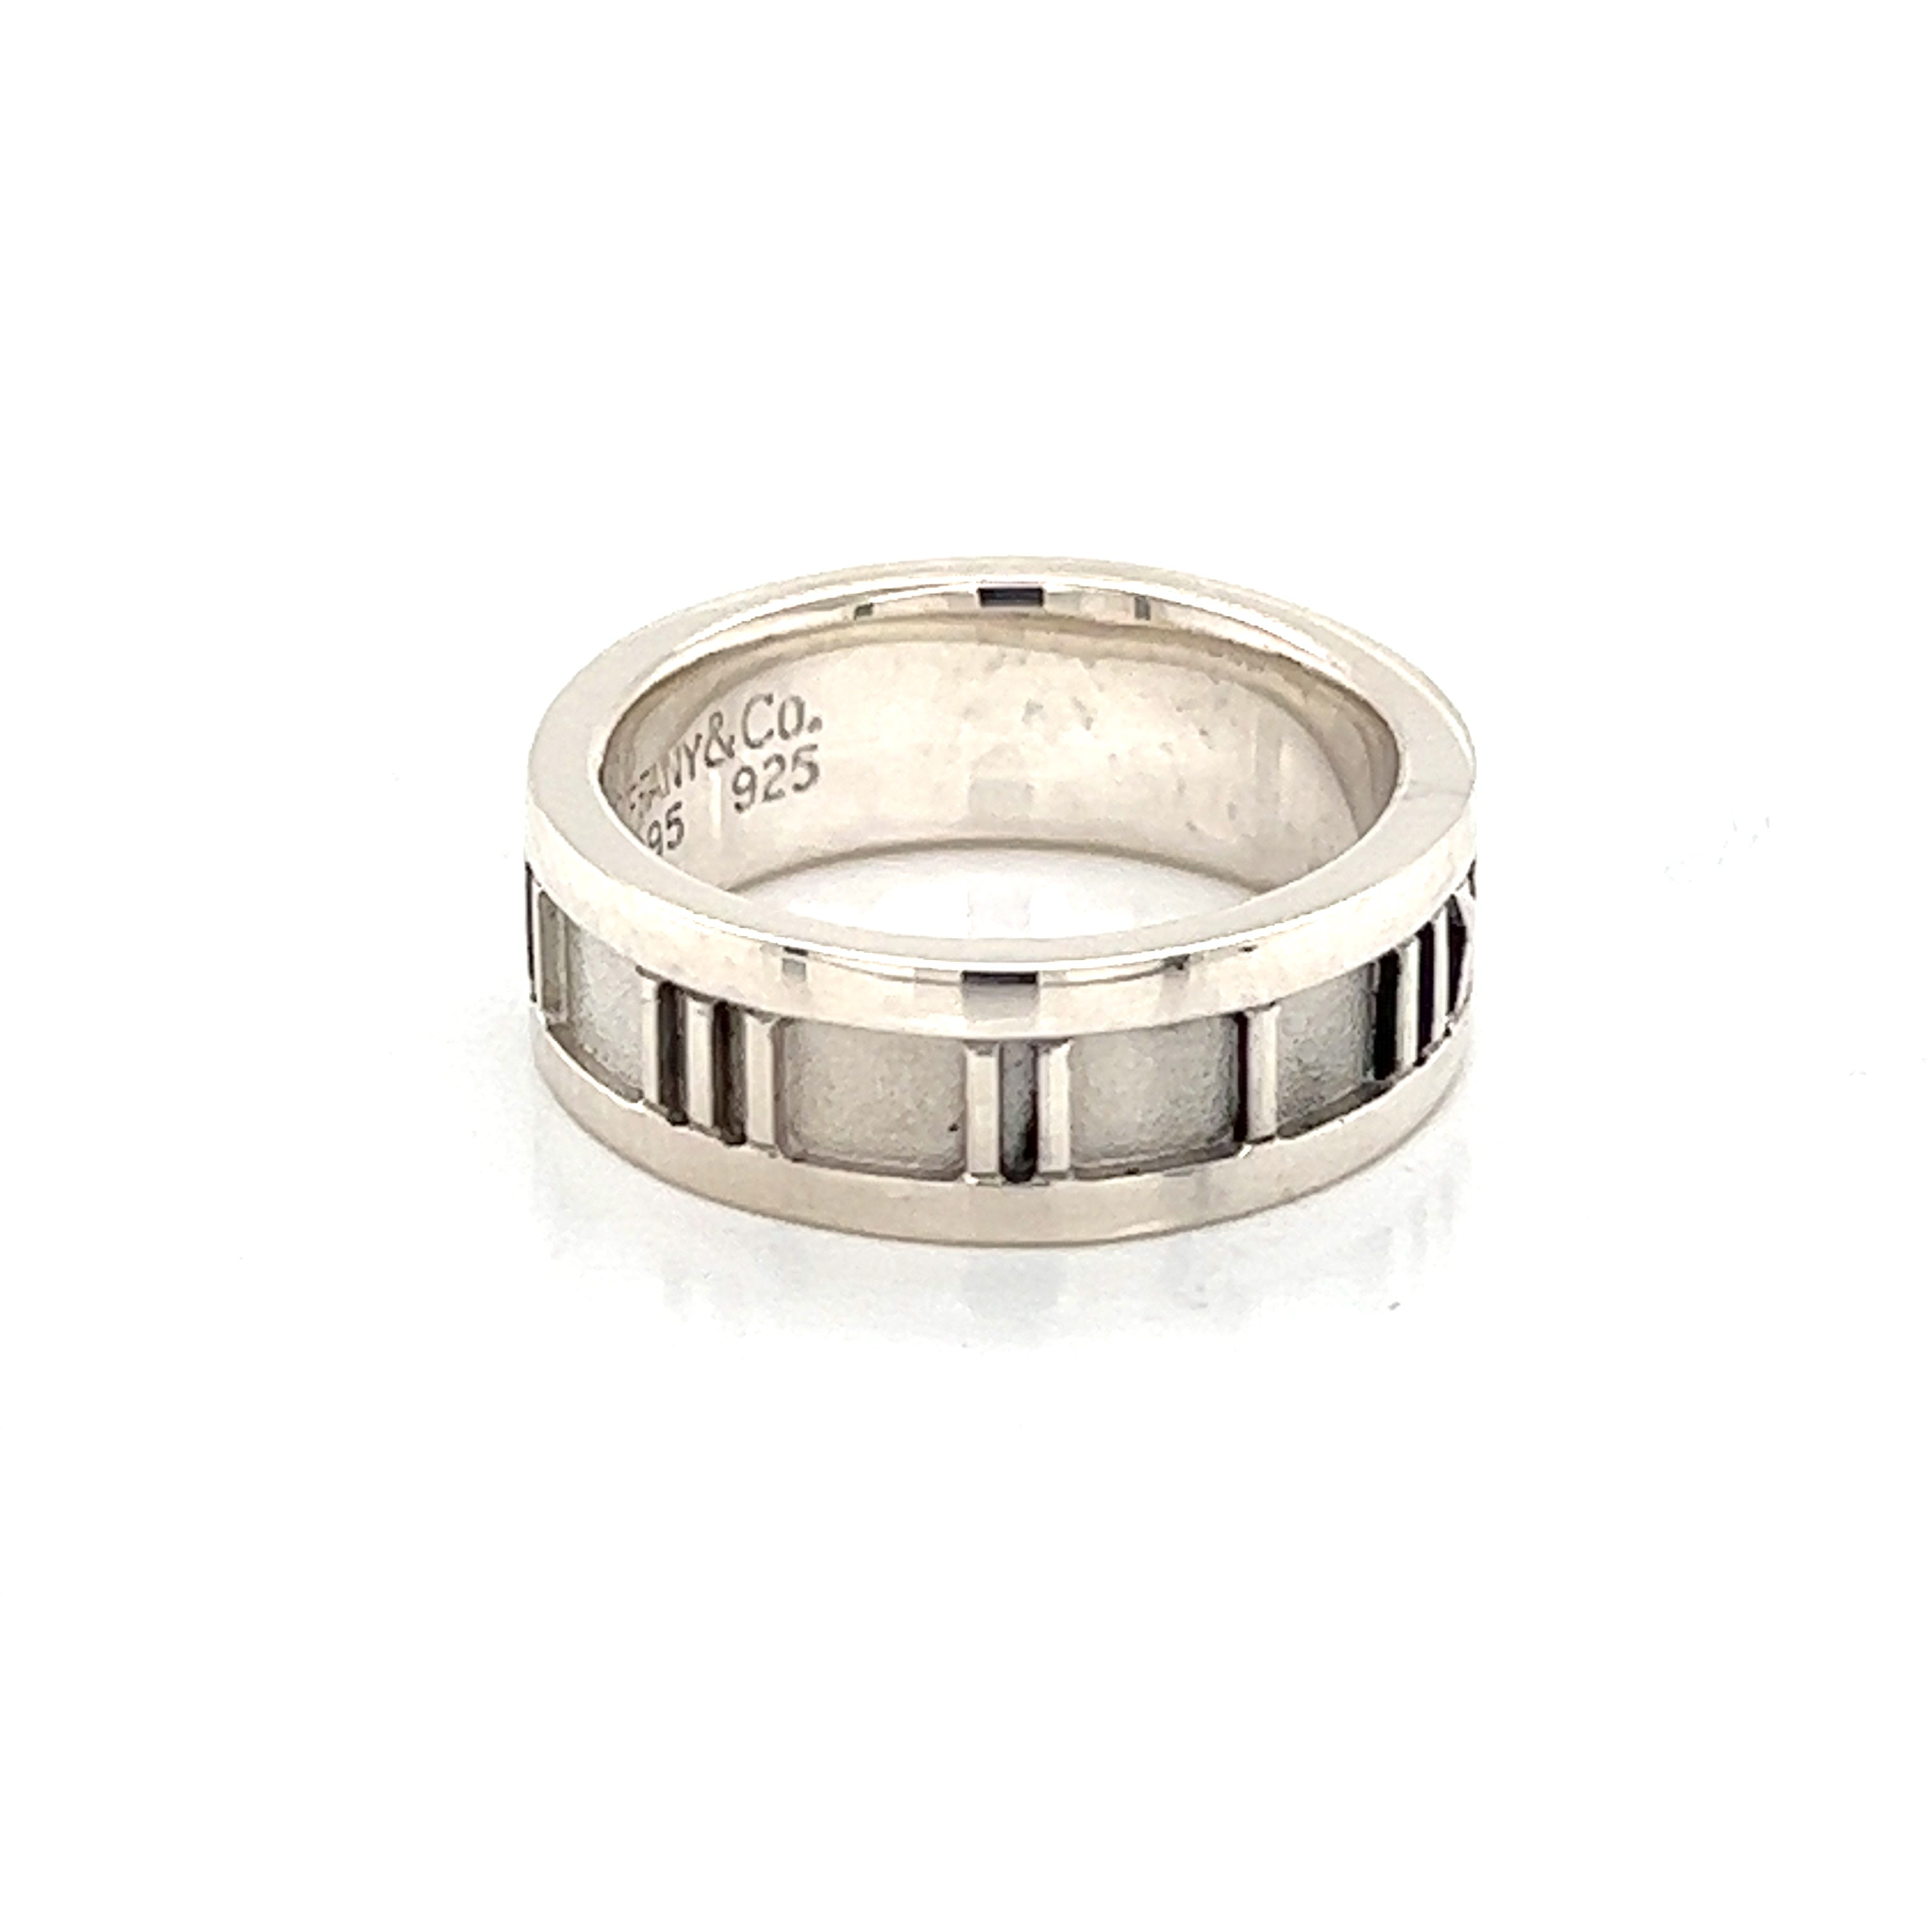 Tiffany & Co 4mm Etoile Ring Size M - Bloomsbury Manor Ltd